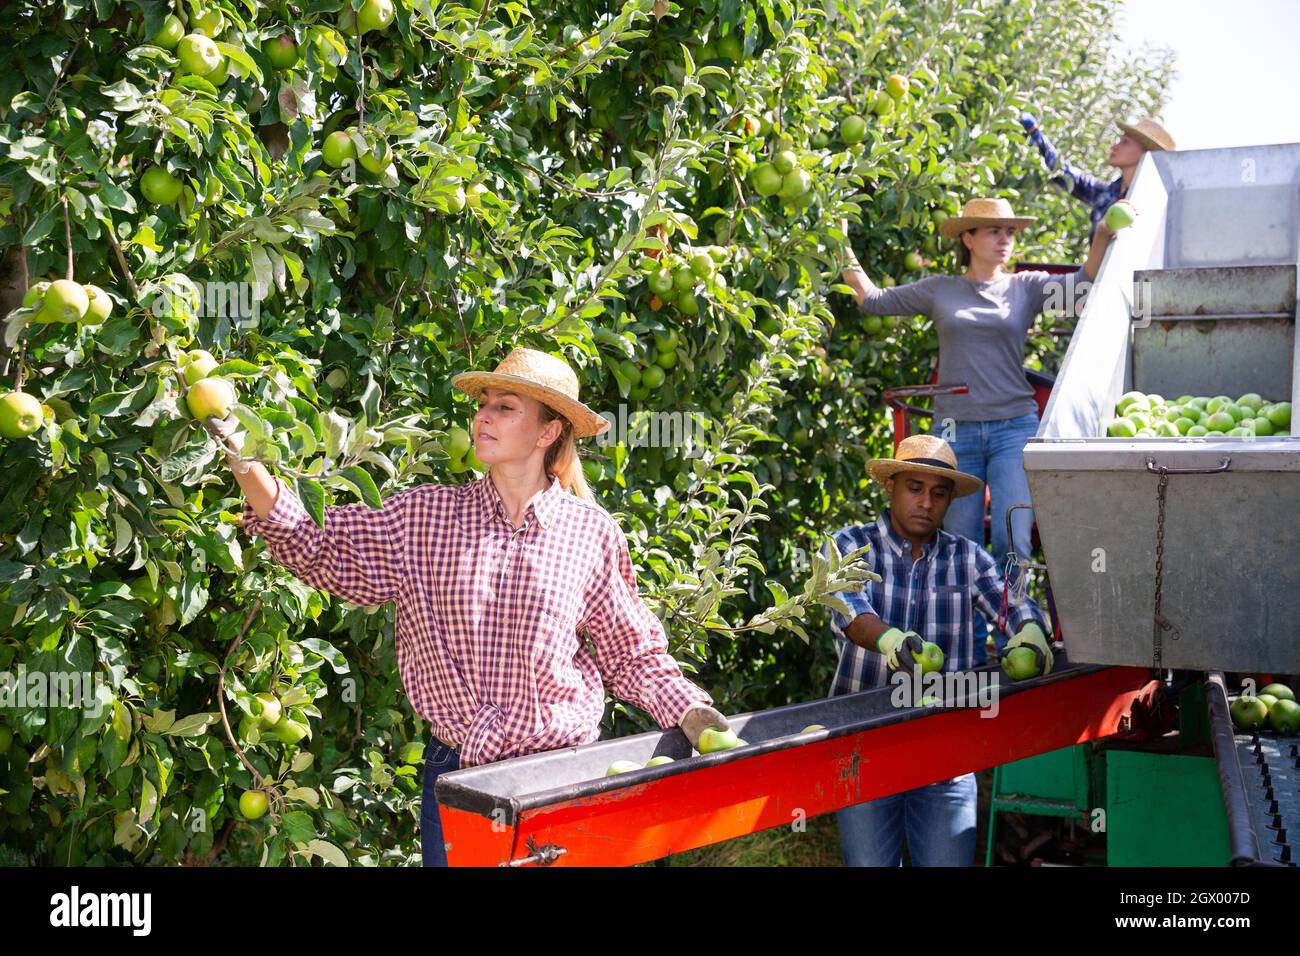 Workers harvesting ripe apples using sorting machine Stock Photo